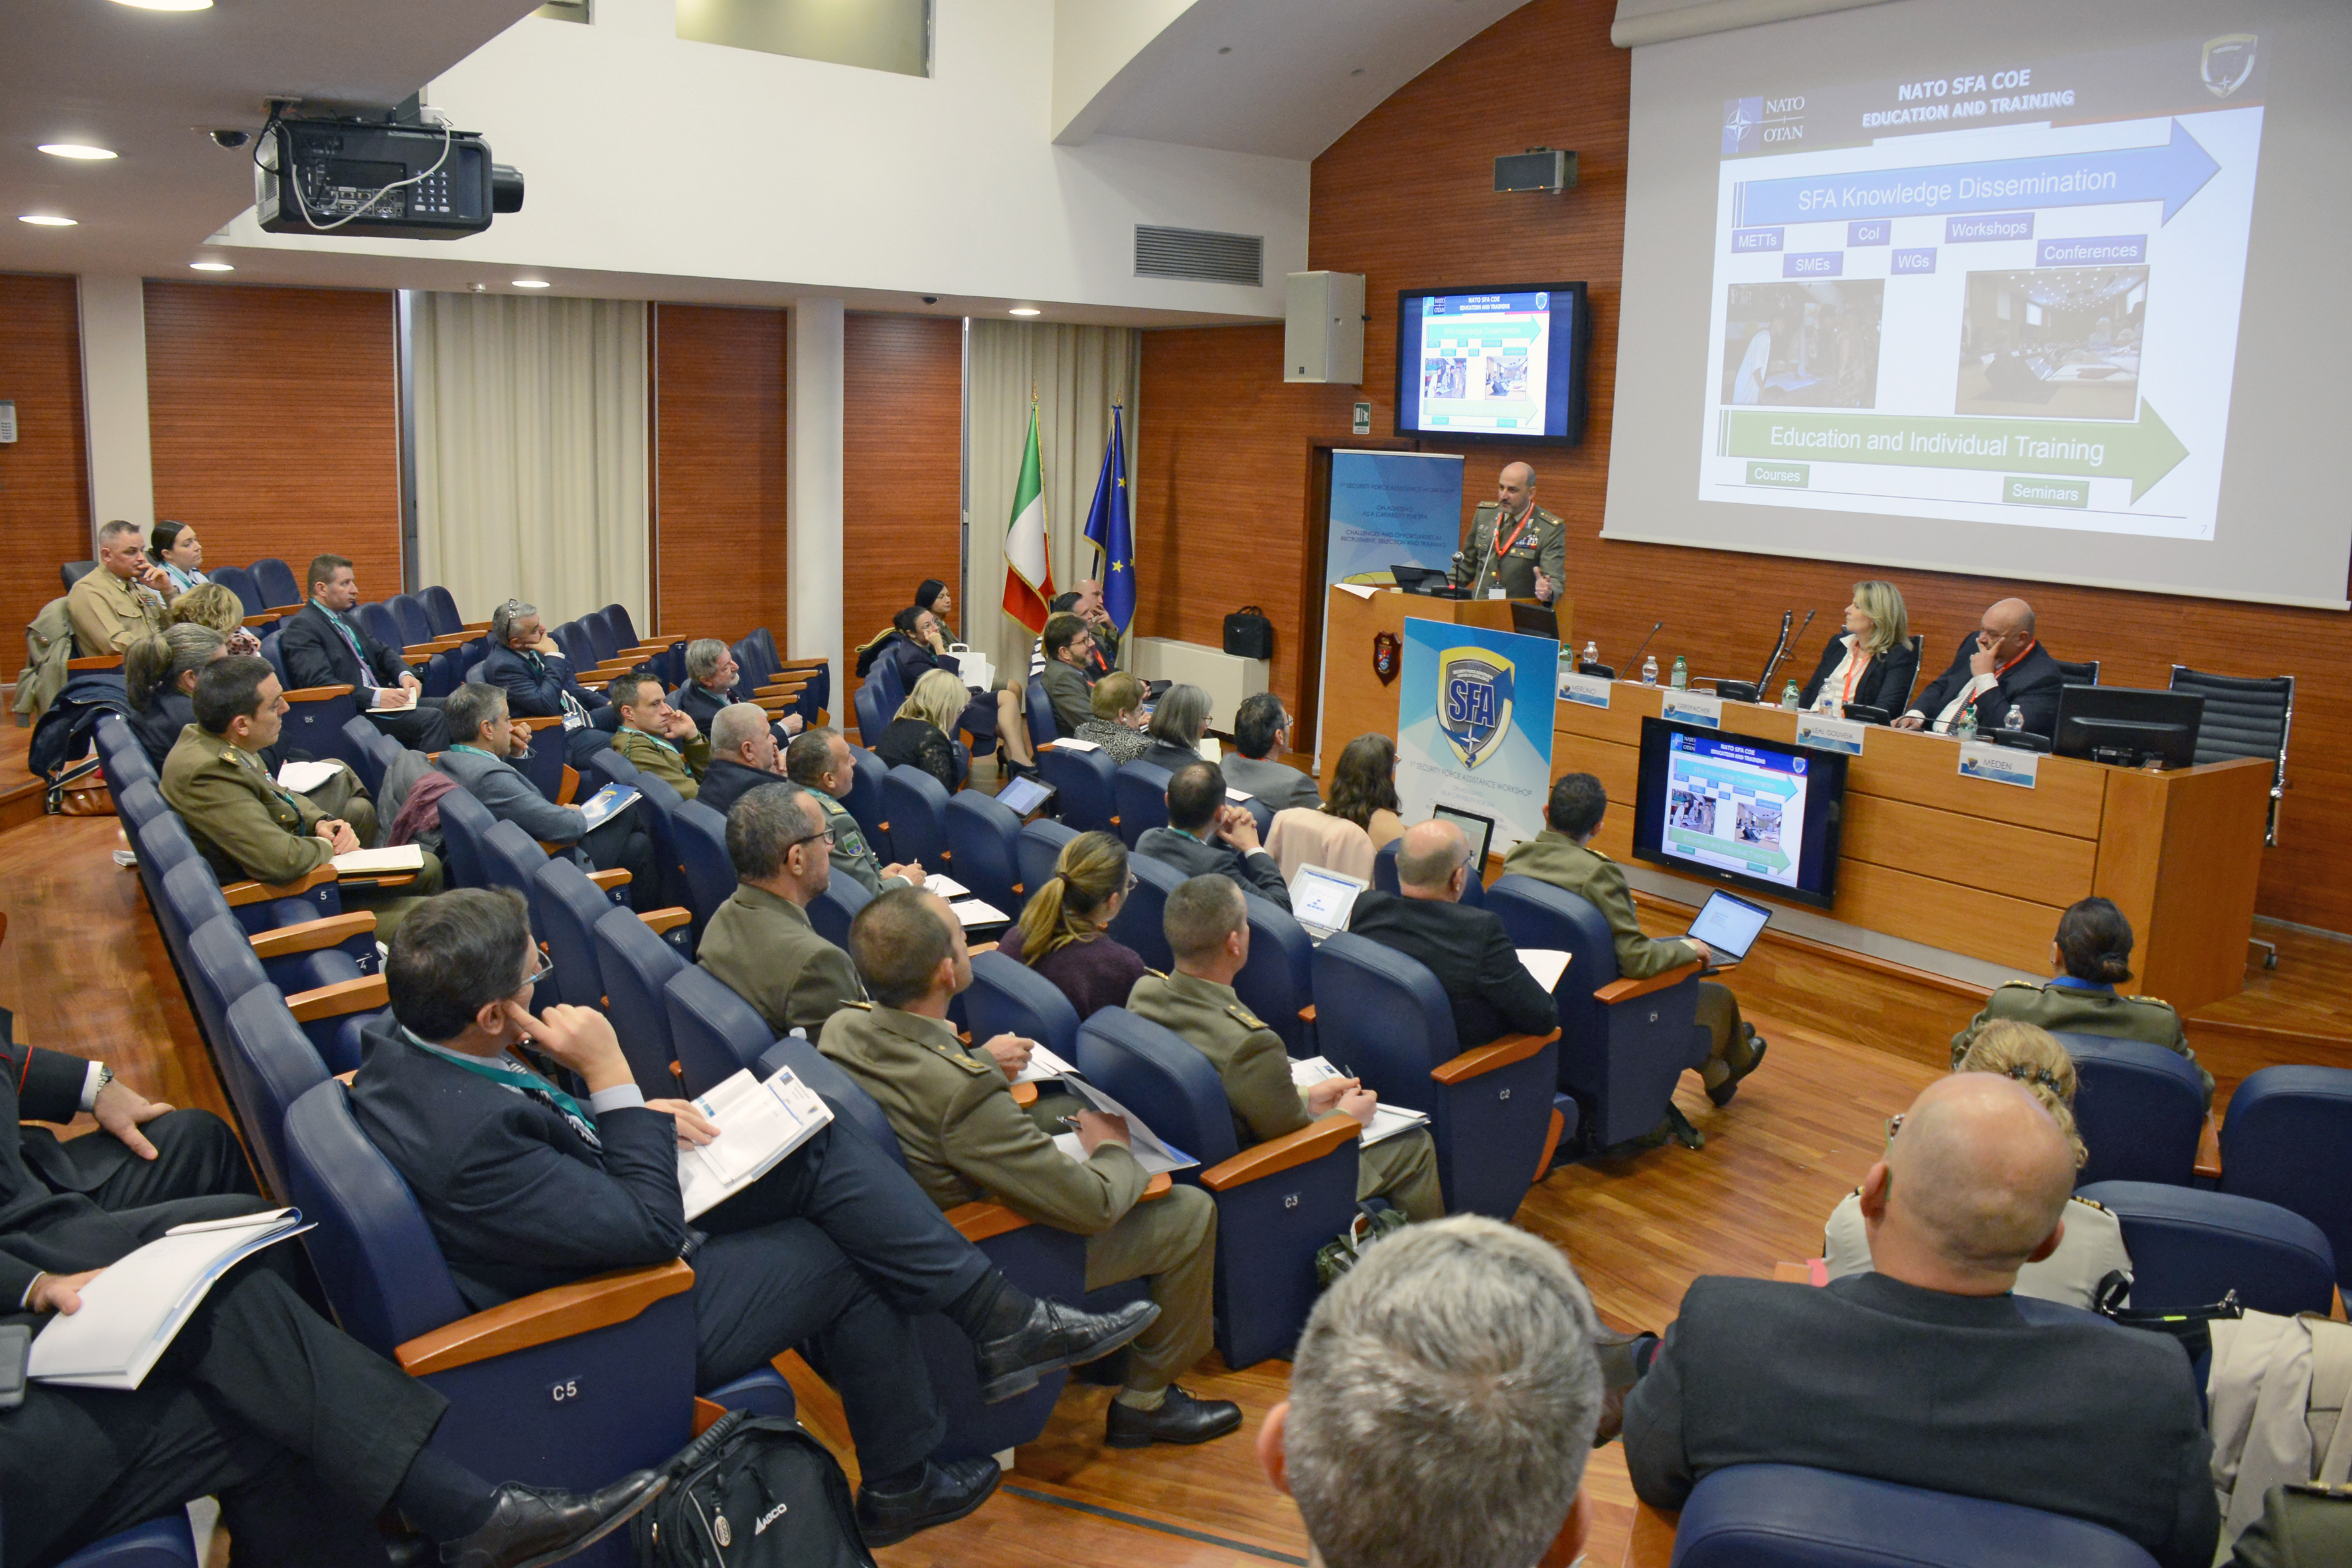 NATO SFA COE: Concluded the 1st Workshop on the Strategic Advisor